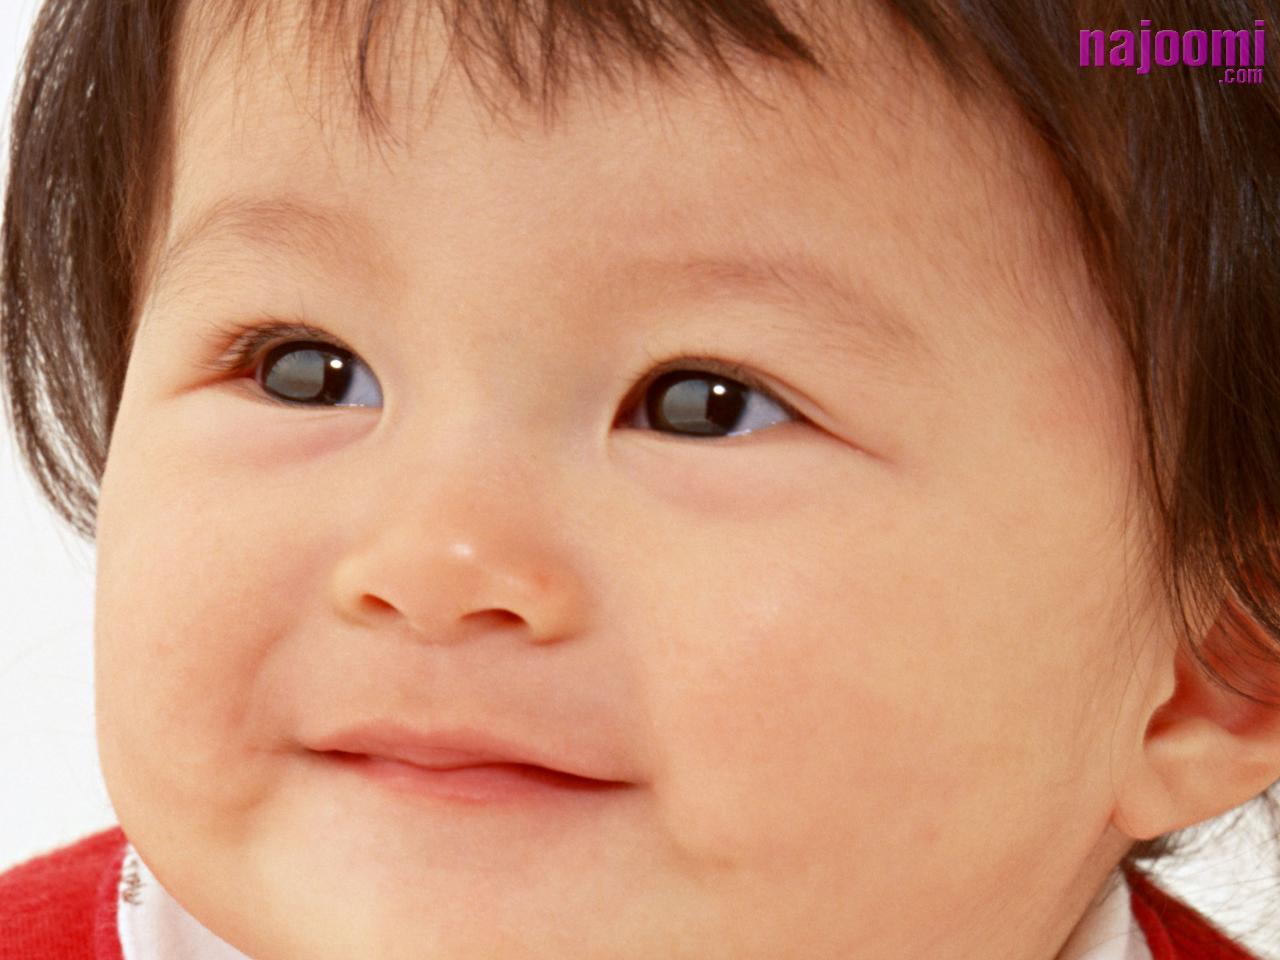 http://3.bp.blogspot.com/-GgLOv6HFdWs/TuvlFKHvHZI/AAAAAAAAAtM/LToDeFiTh9U/s1600/Cute+Baby+Smiling-176258.jpeg